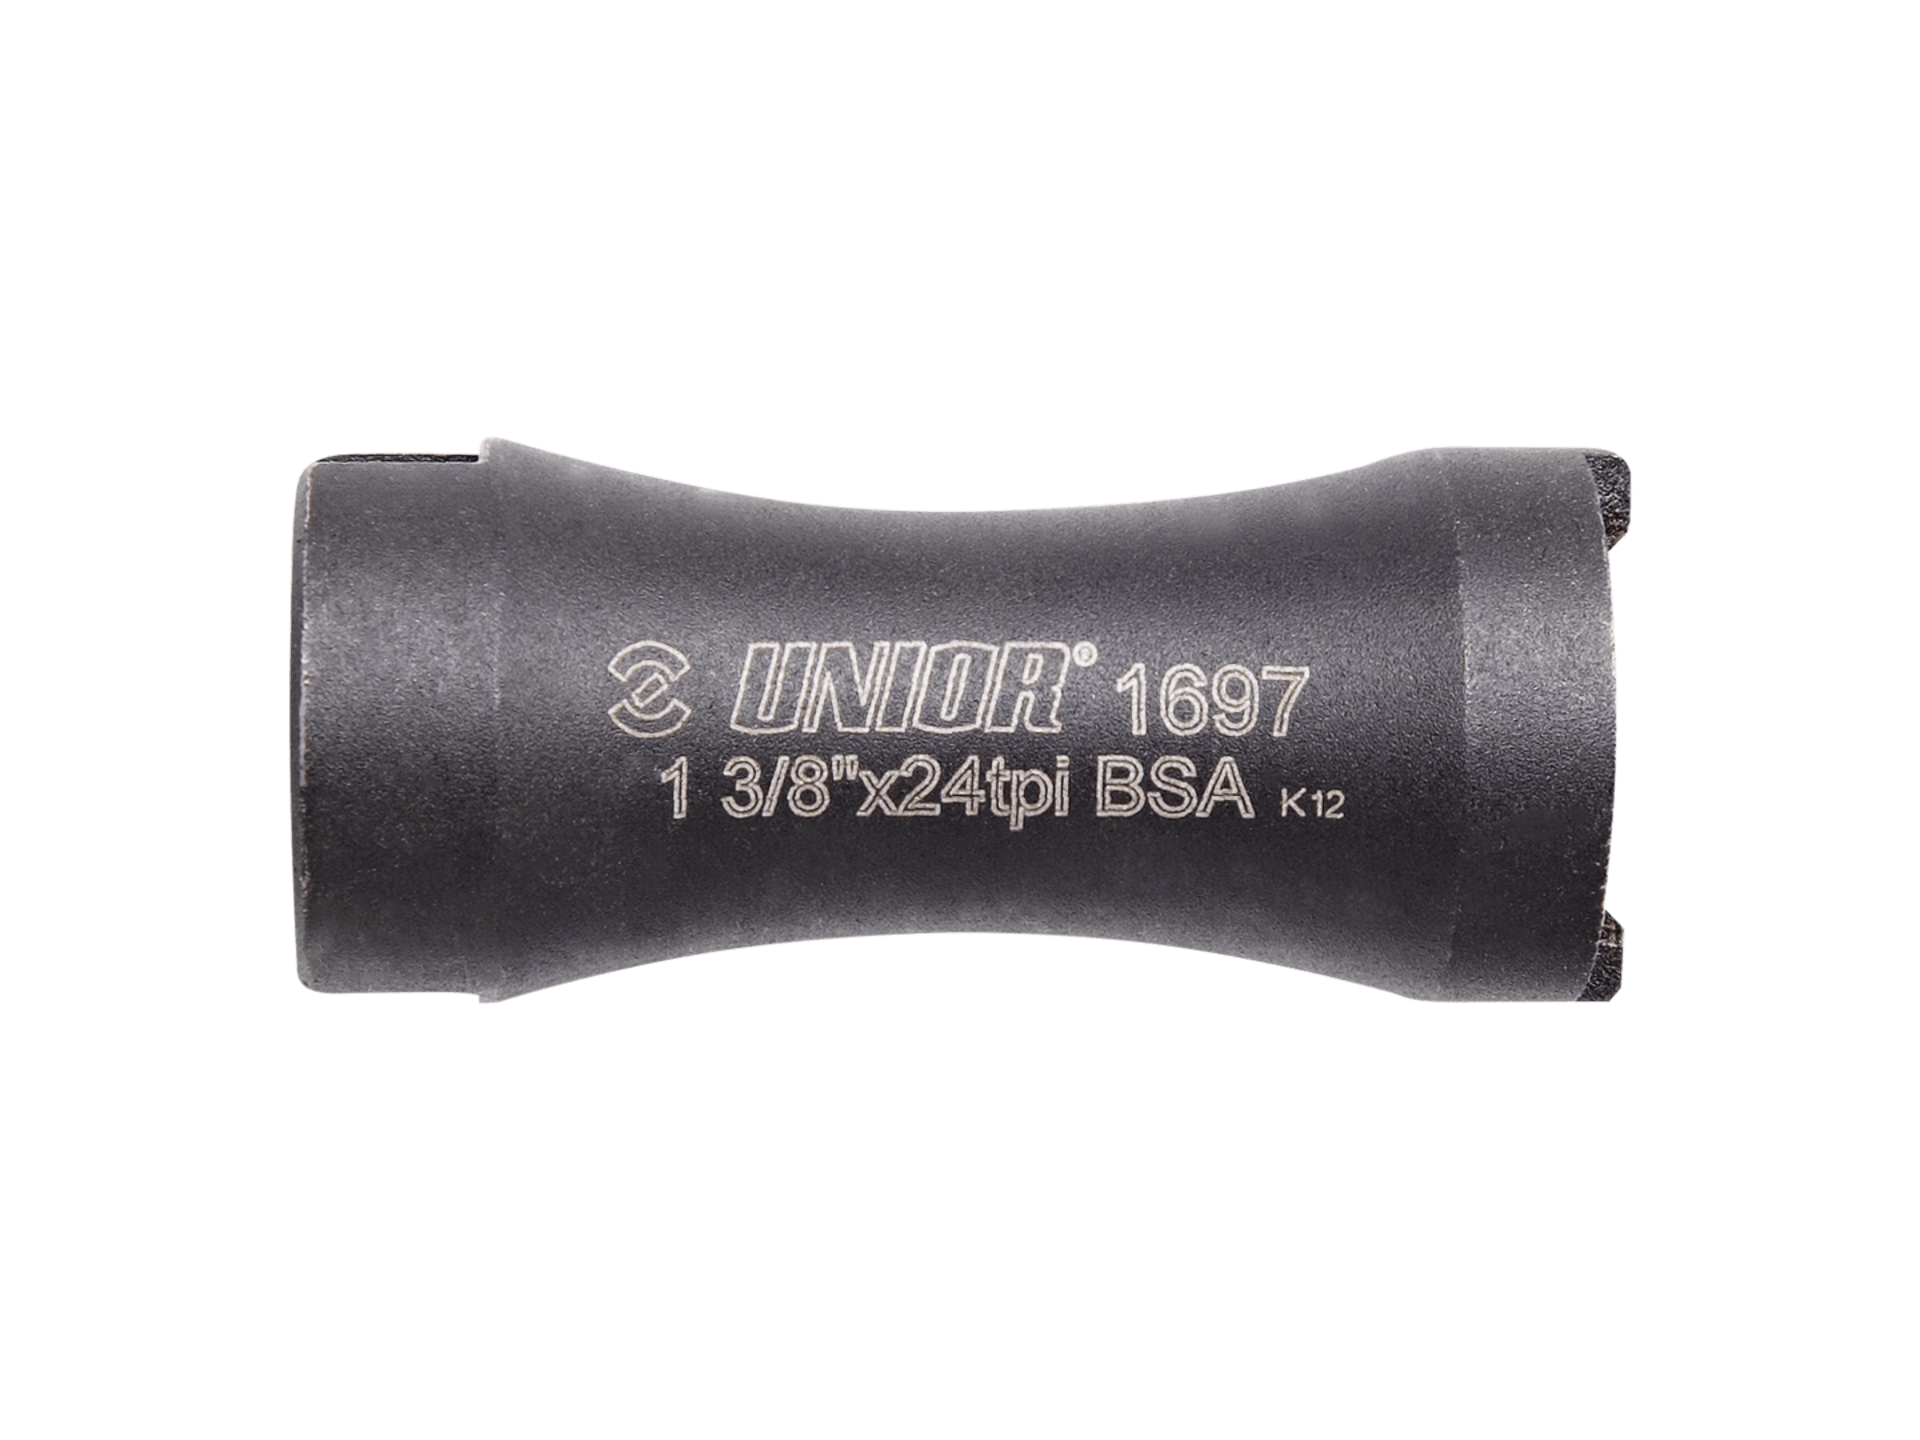 Unior BSA Bottom Bracket Tap Adapter